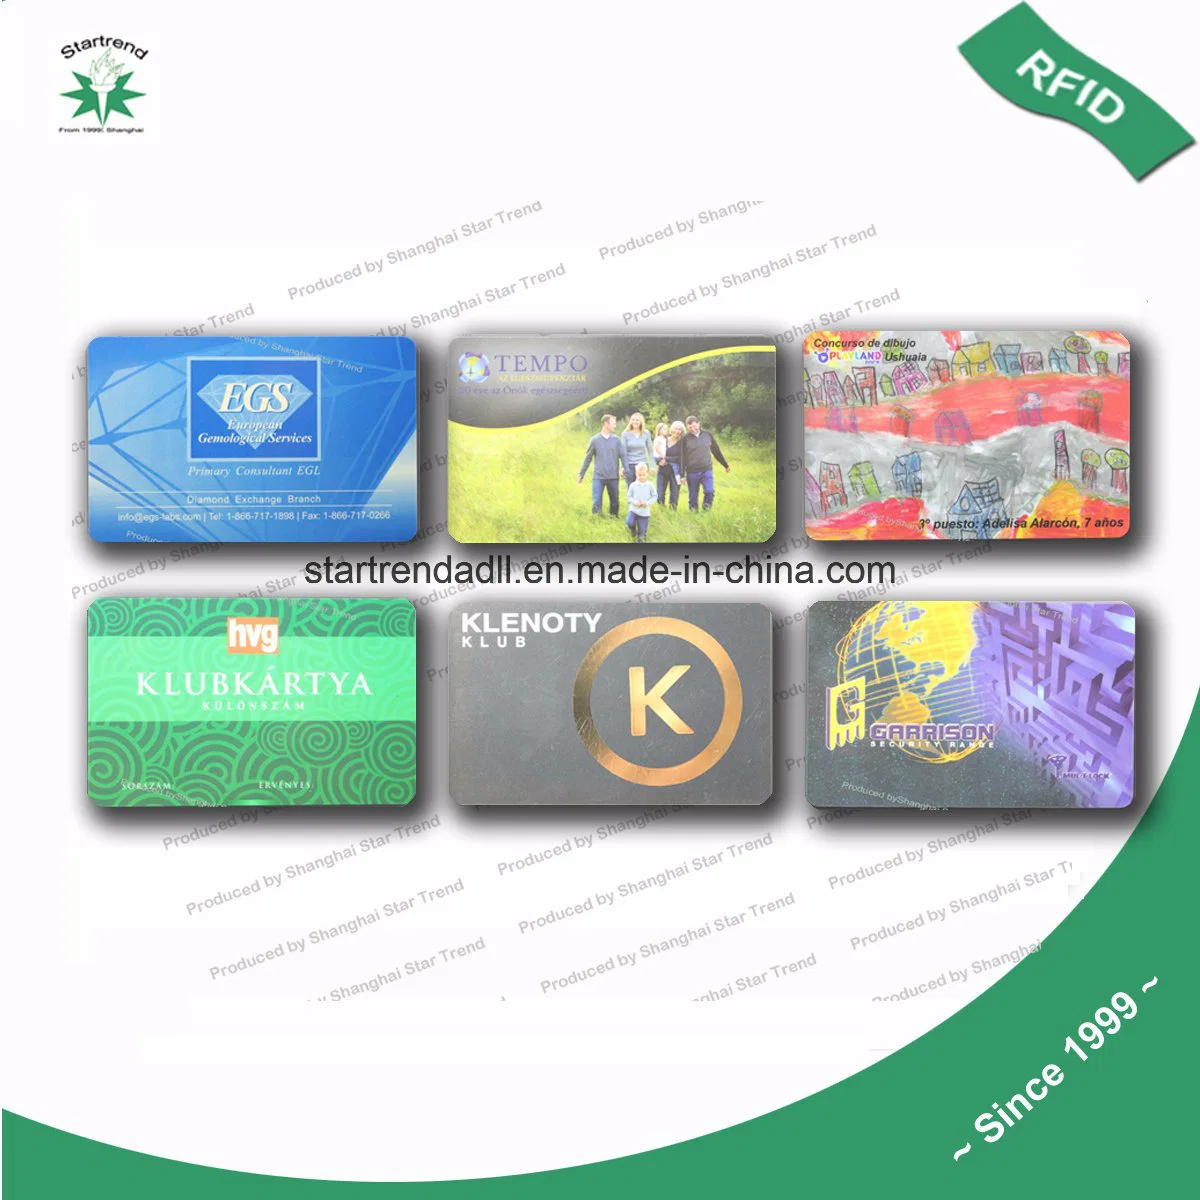 Card - Tarjeta de PVC/tarjeta de plástico utilizado como tarjeta de socio/Business Card/Tarjeta de regalo/tarjeta de prepago o tarjeta de fidelización/Hotel/Etiqueta clave Tarjeta de cajero automático con banda magnética/Hot Stamp/Chip